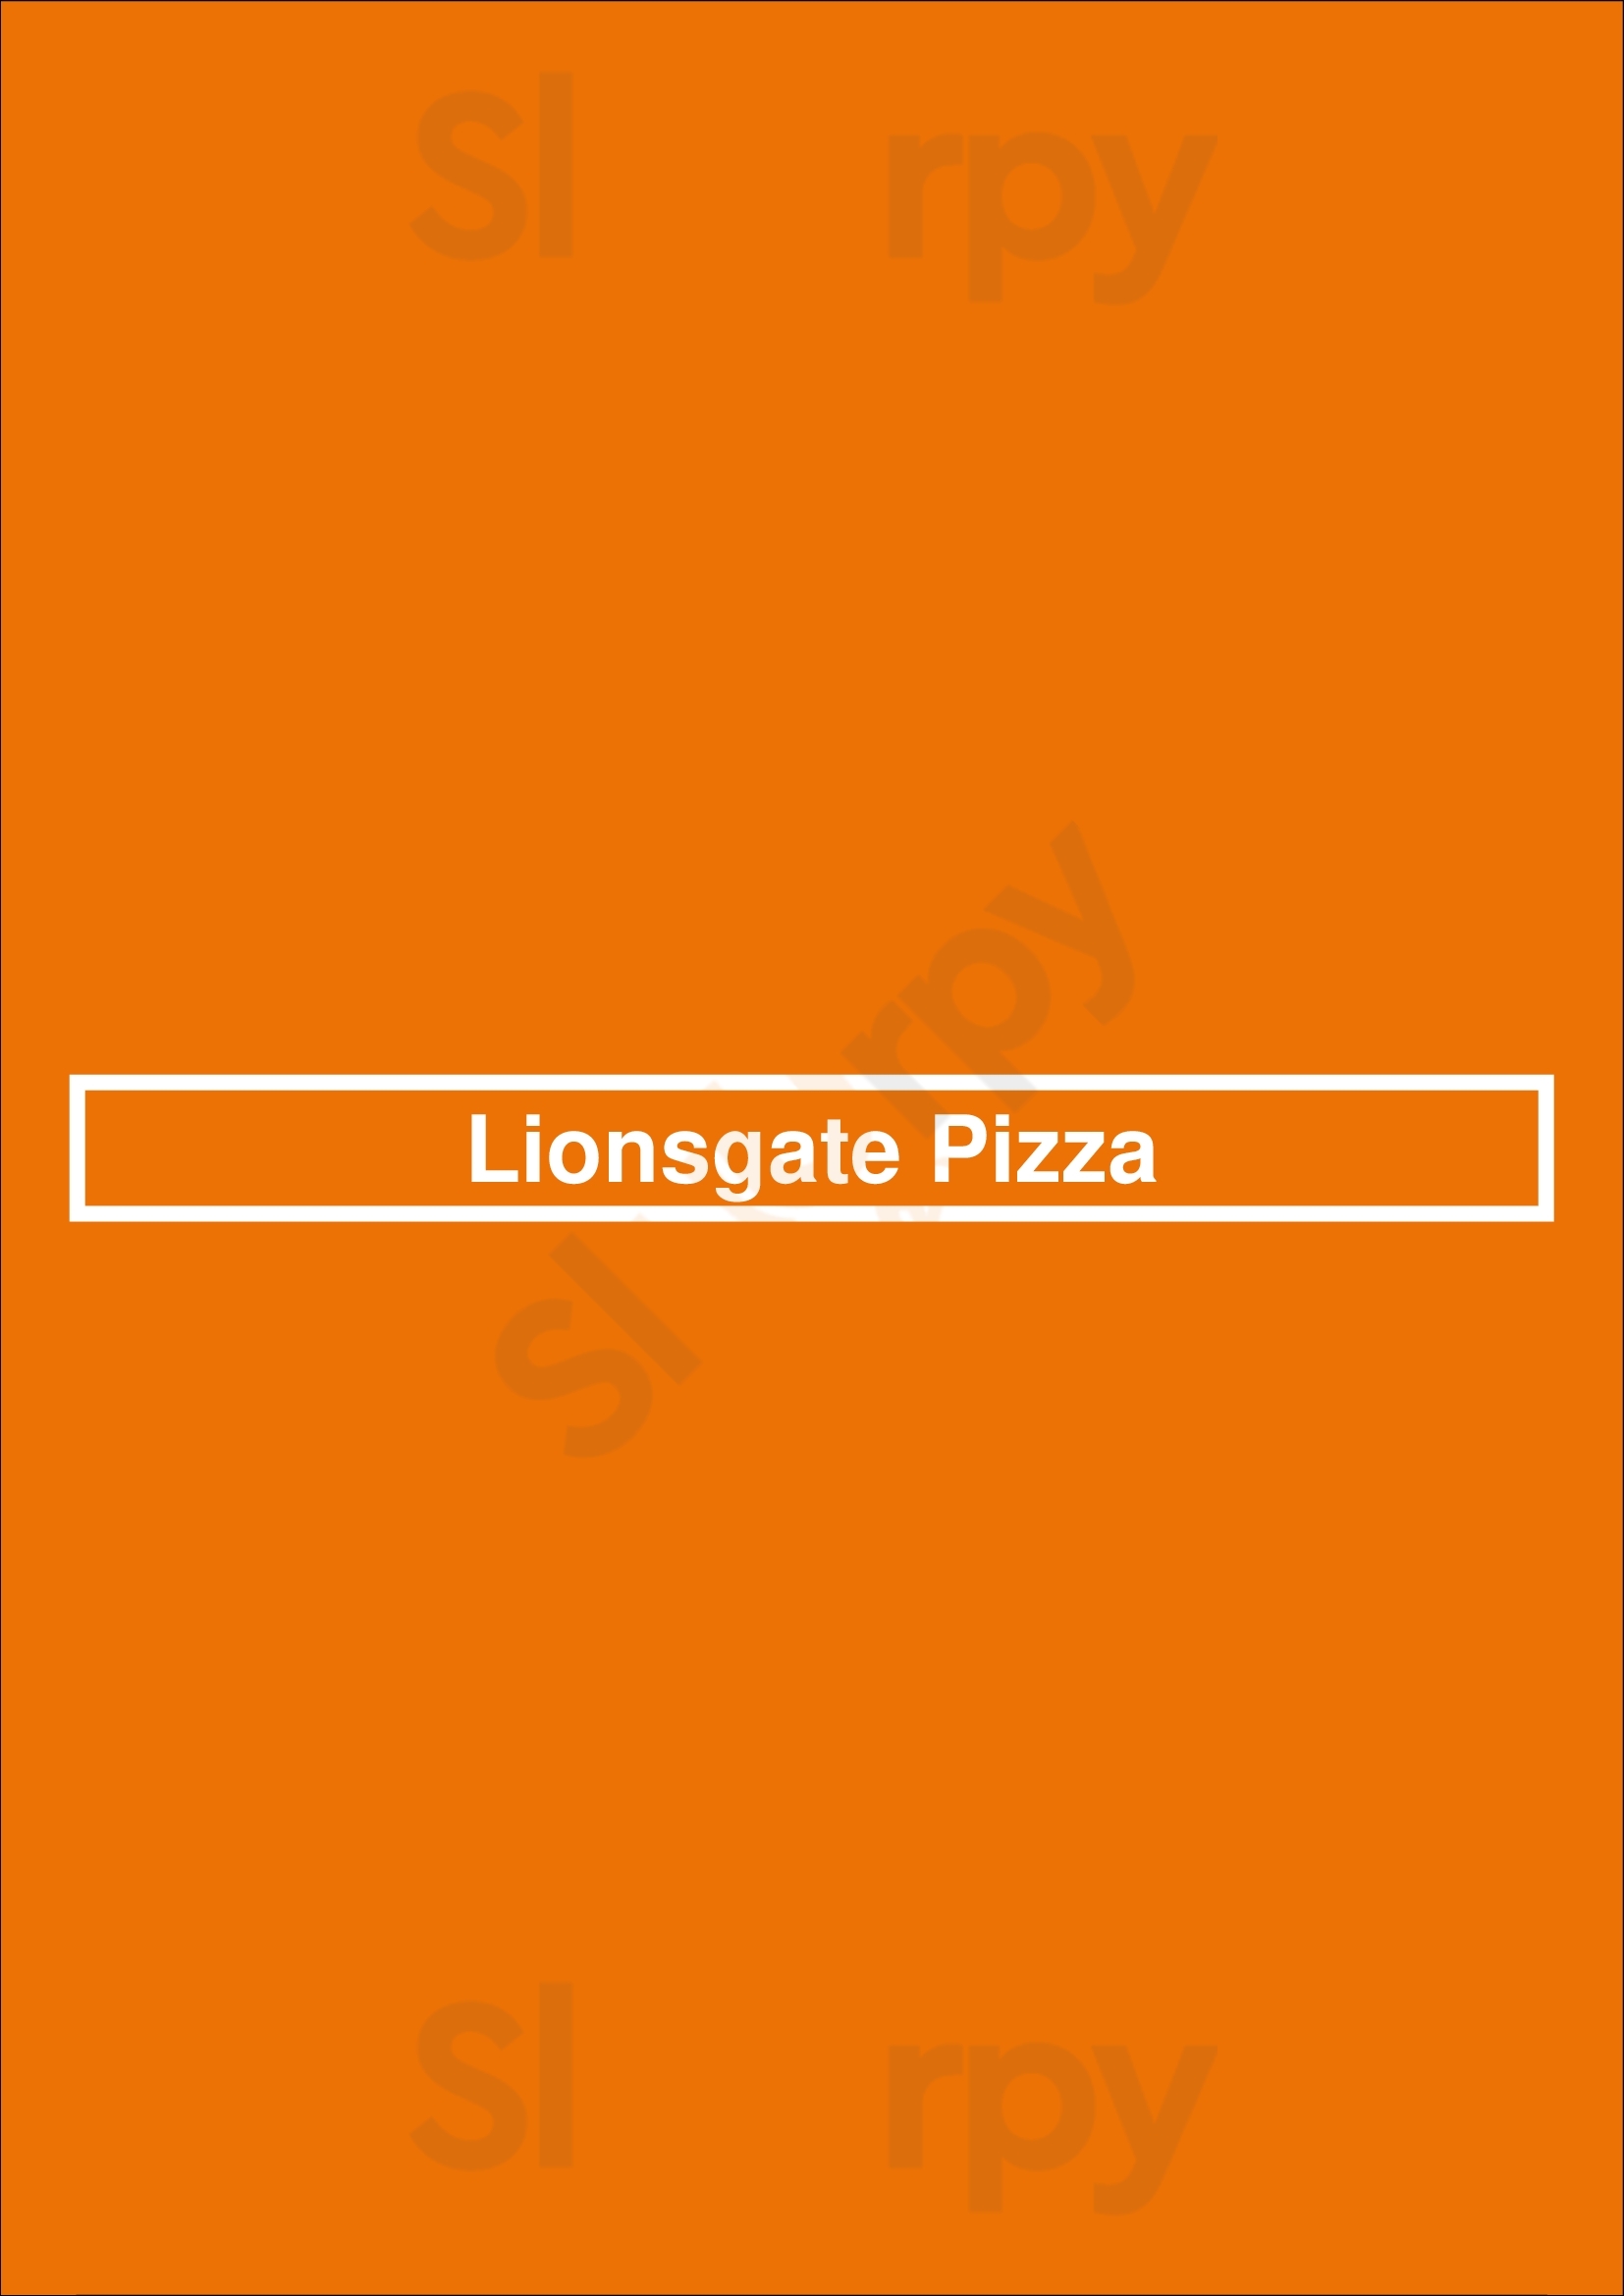 Lionsgate Pizza North Vancouver Menu - 1